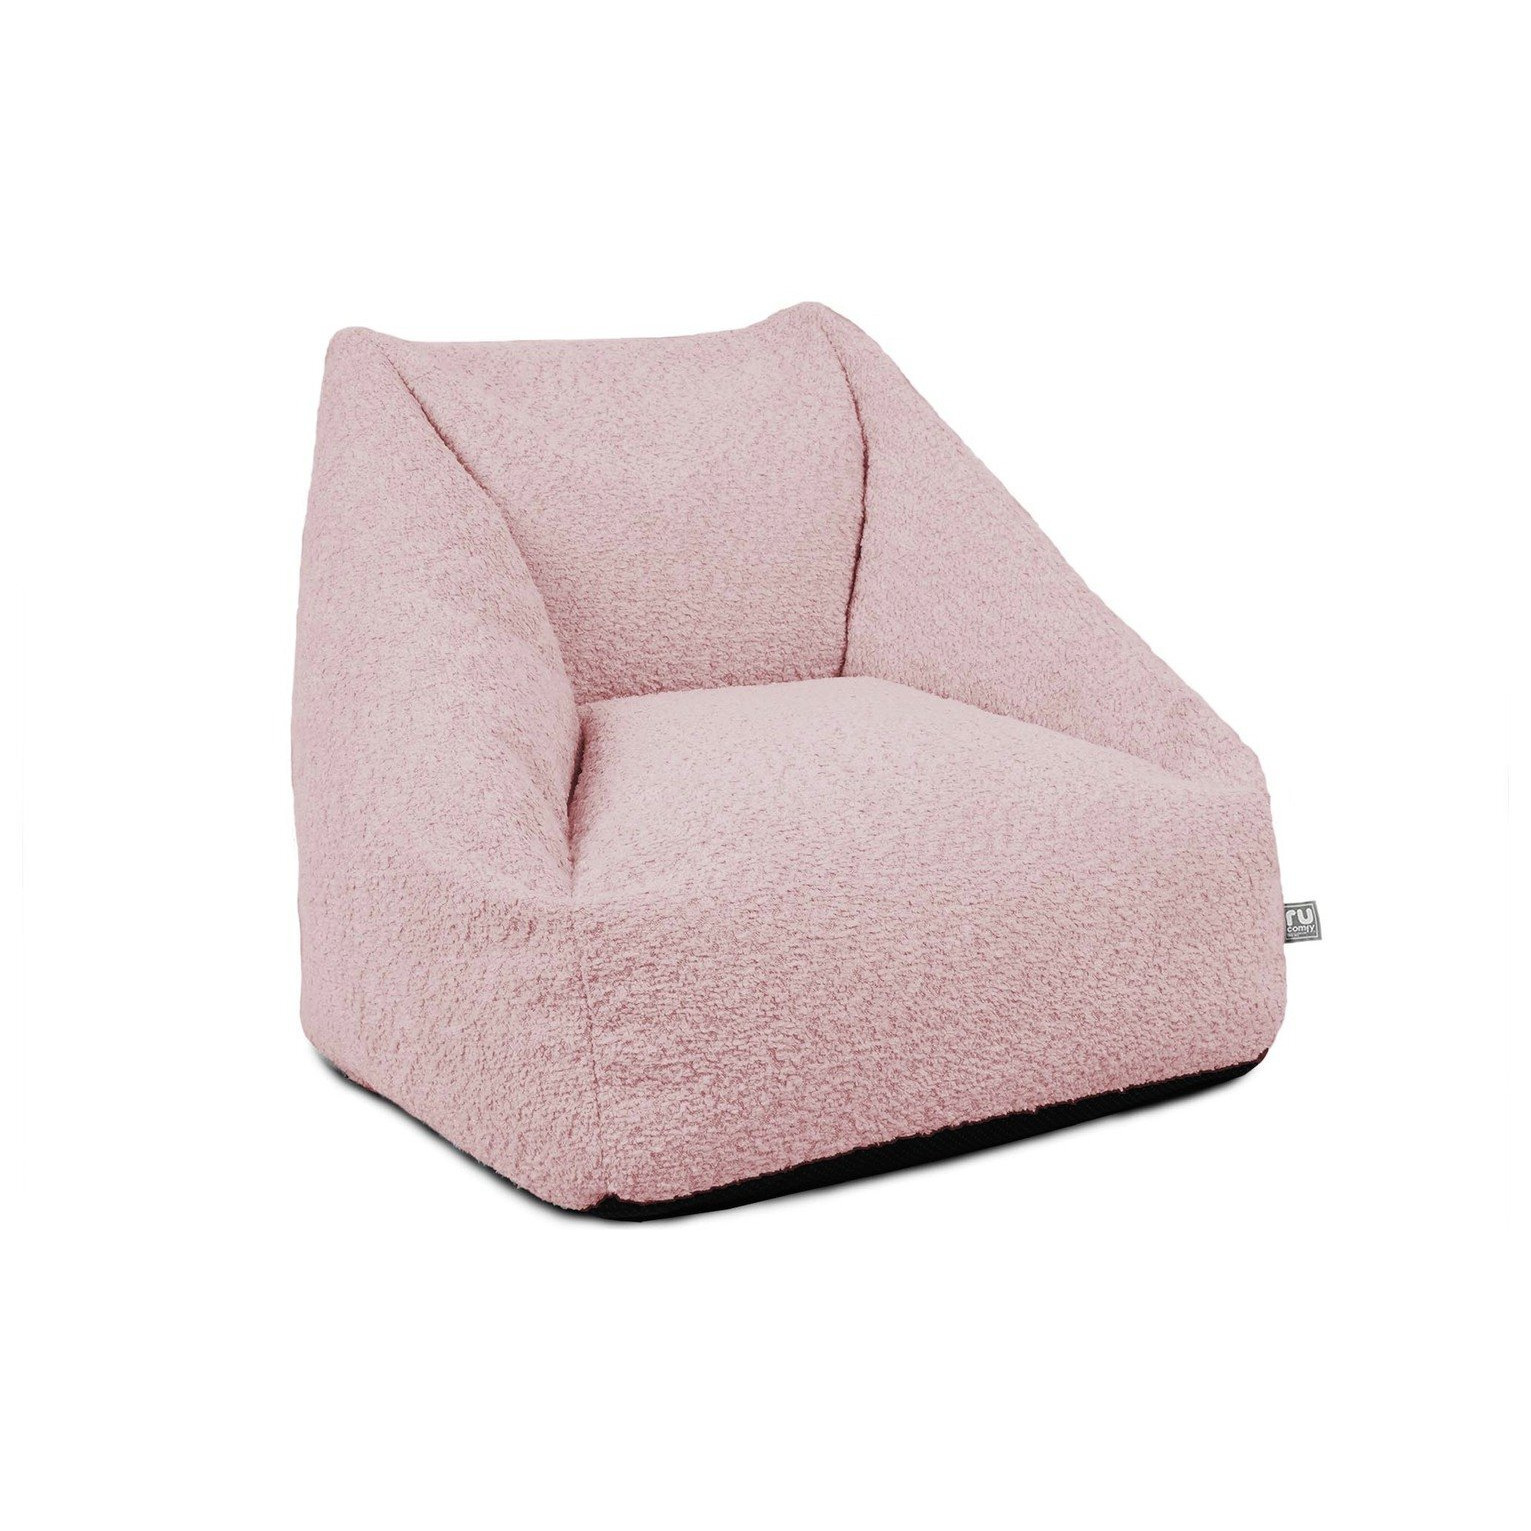 rucomfy Kids Snuggle Bean Bag Chair -Pink - image 1